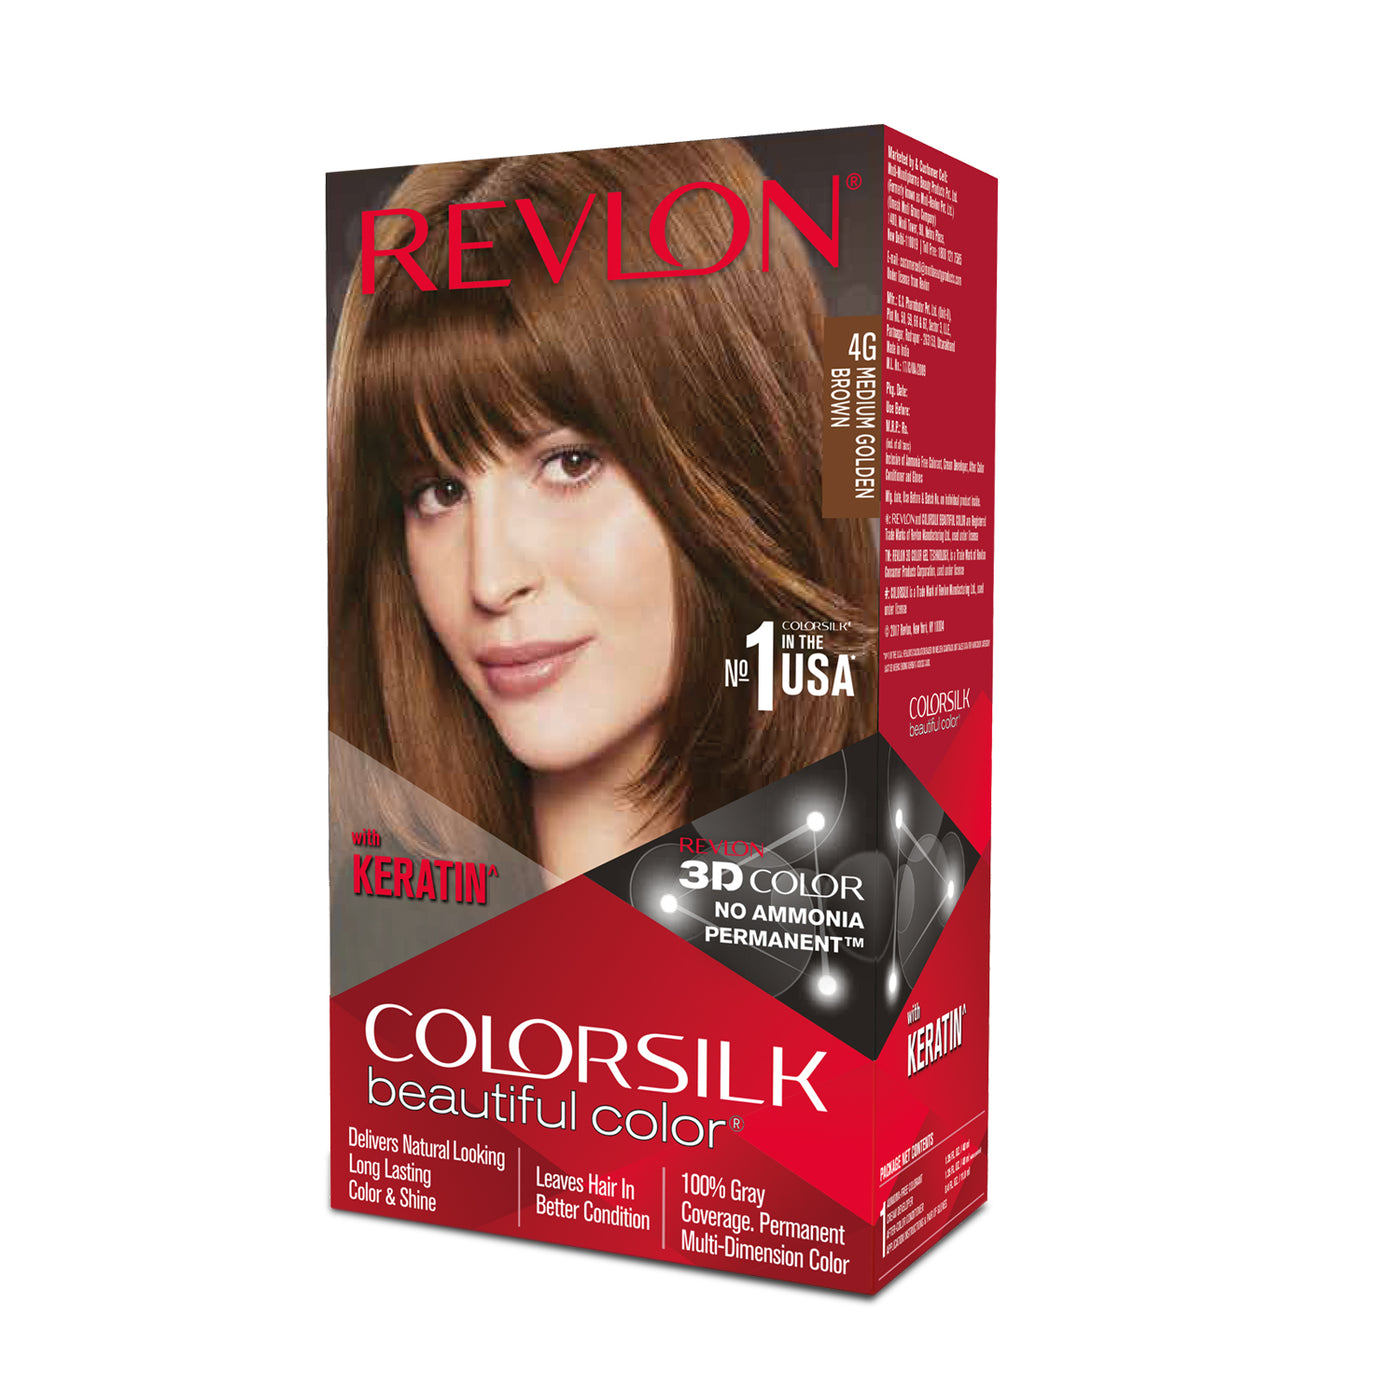 Revlon Hair Color  revlonhaircolorchart  Hair color chart Revlon hair  color Loreal hair color